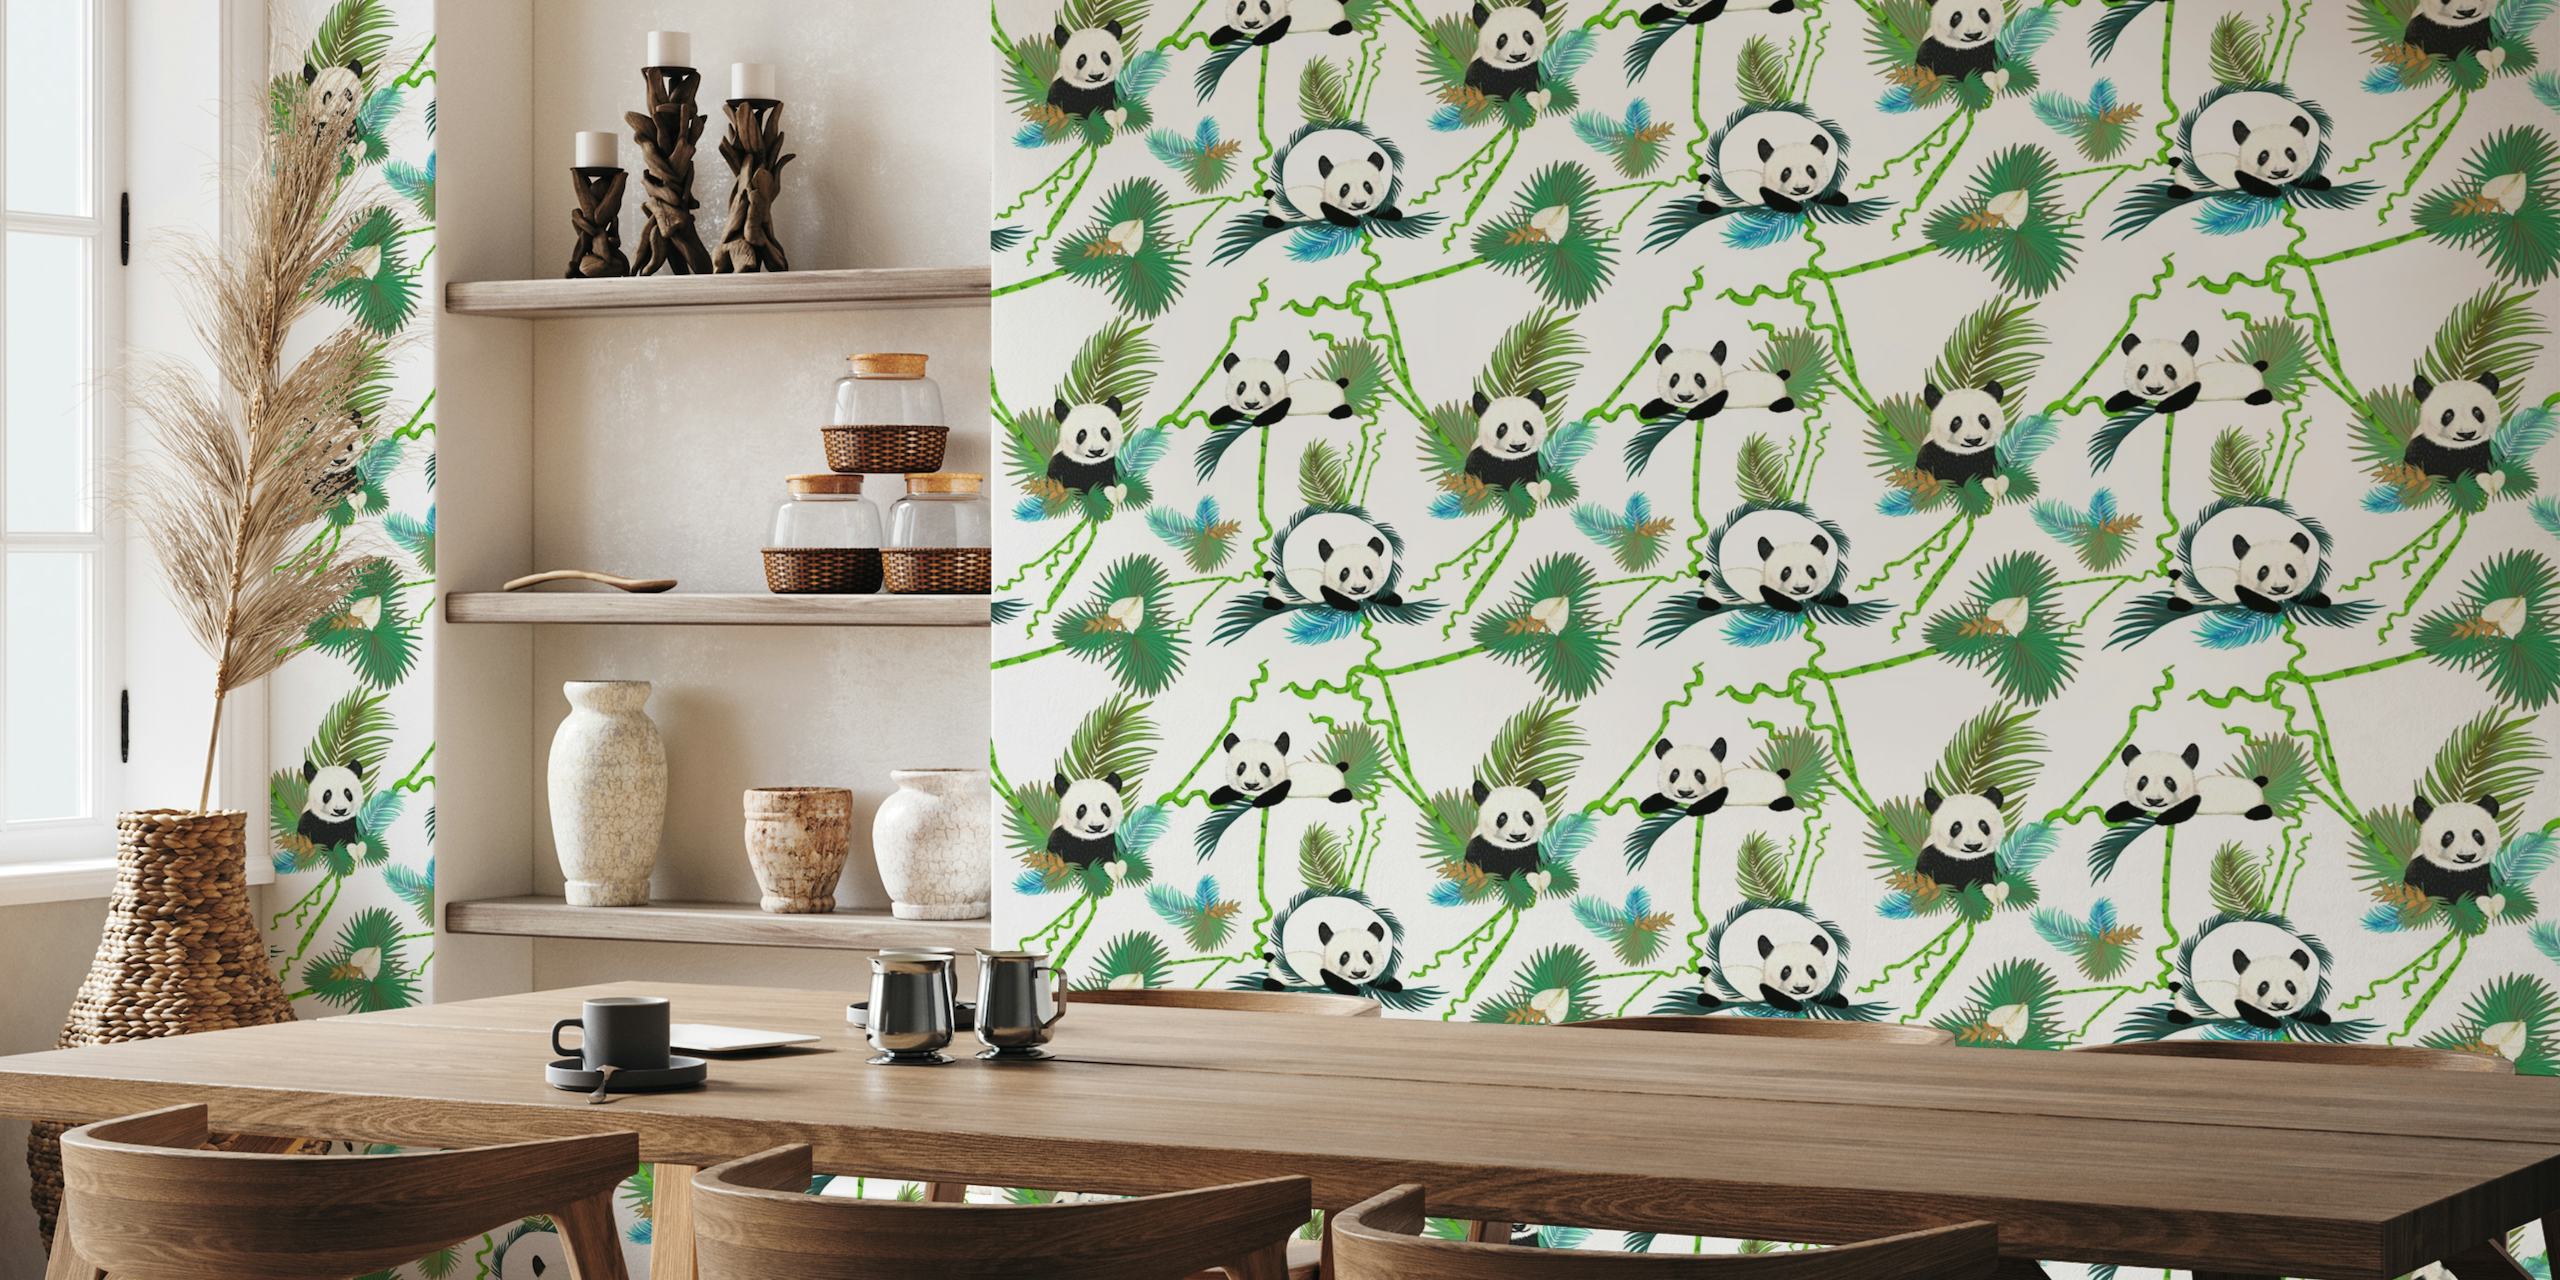 Bamboo and panda papel pintado